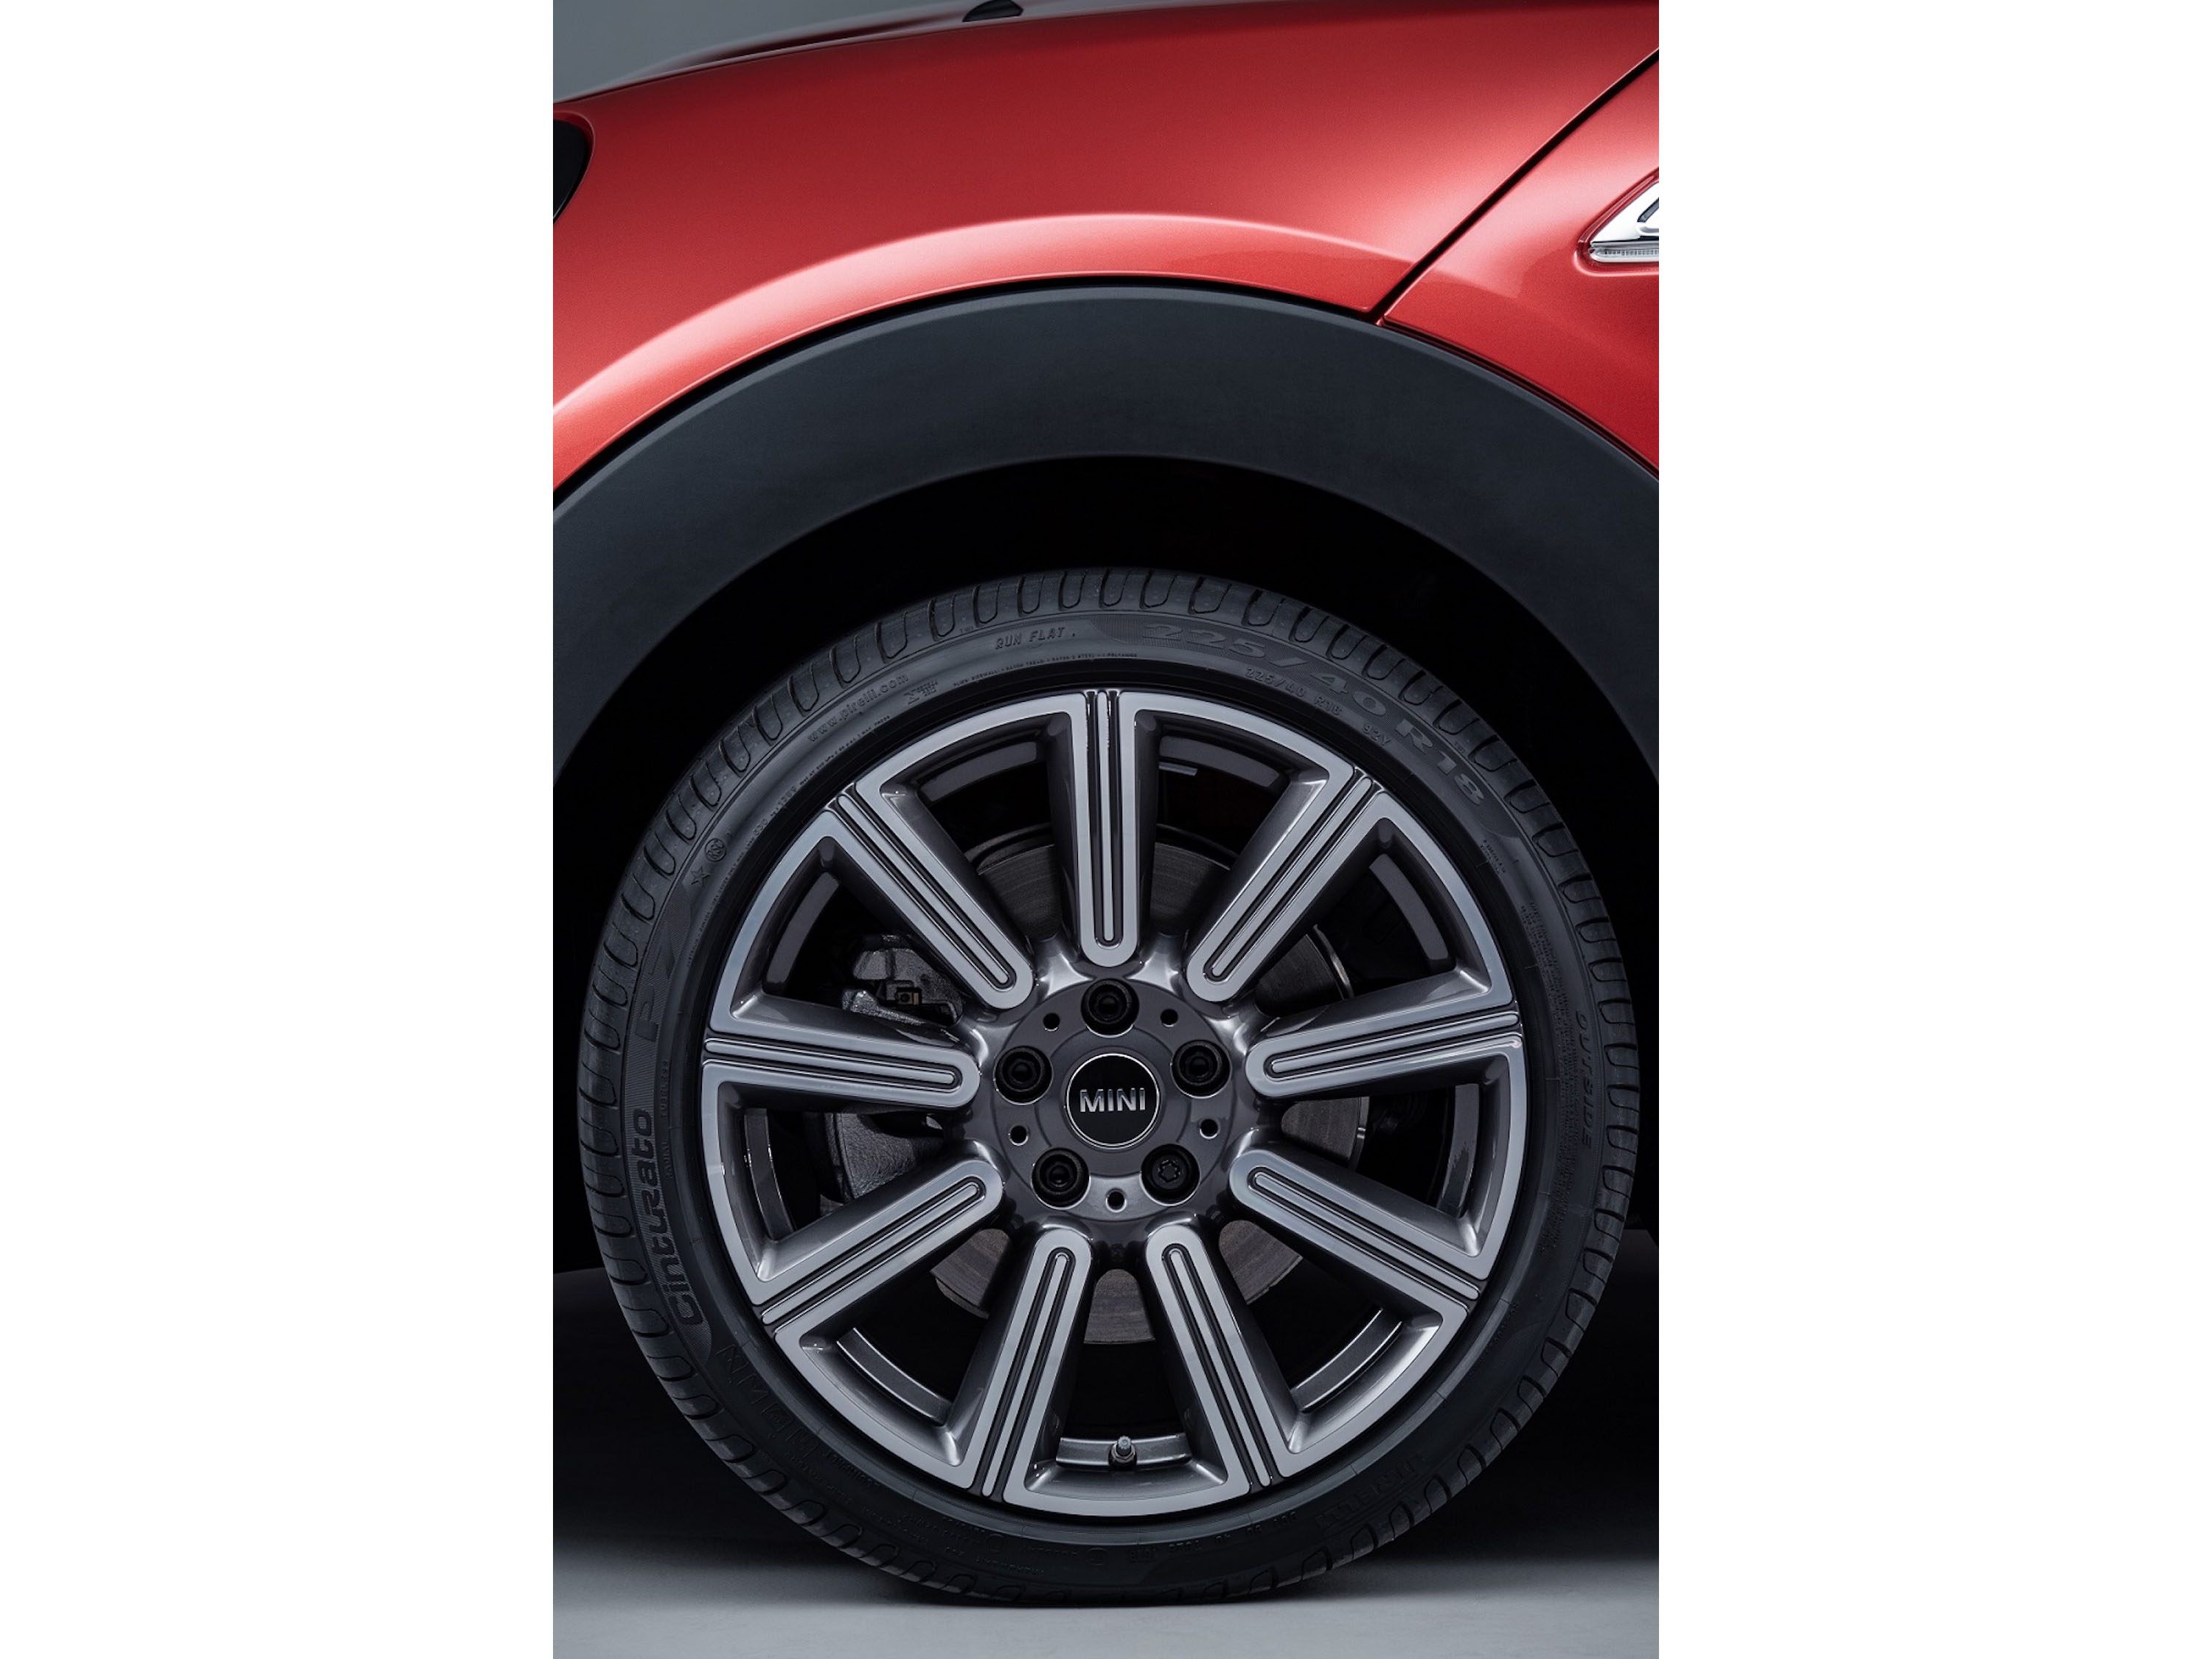 MINI Cooper S Clubman 標準配備全新 18 吋 Multiray Spoke 高光澤雙色輪圈。